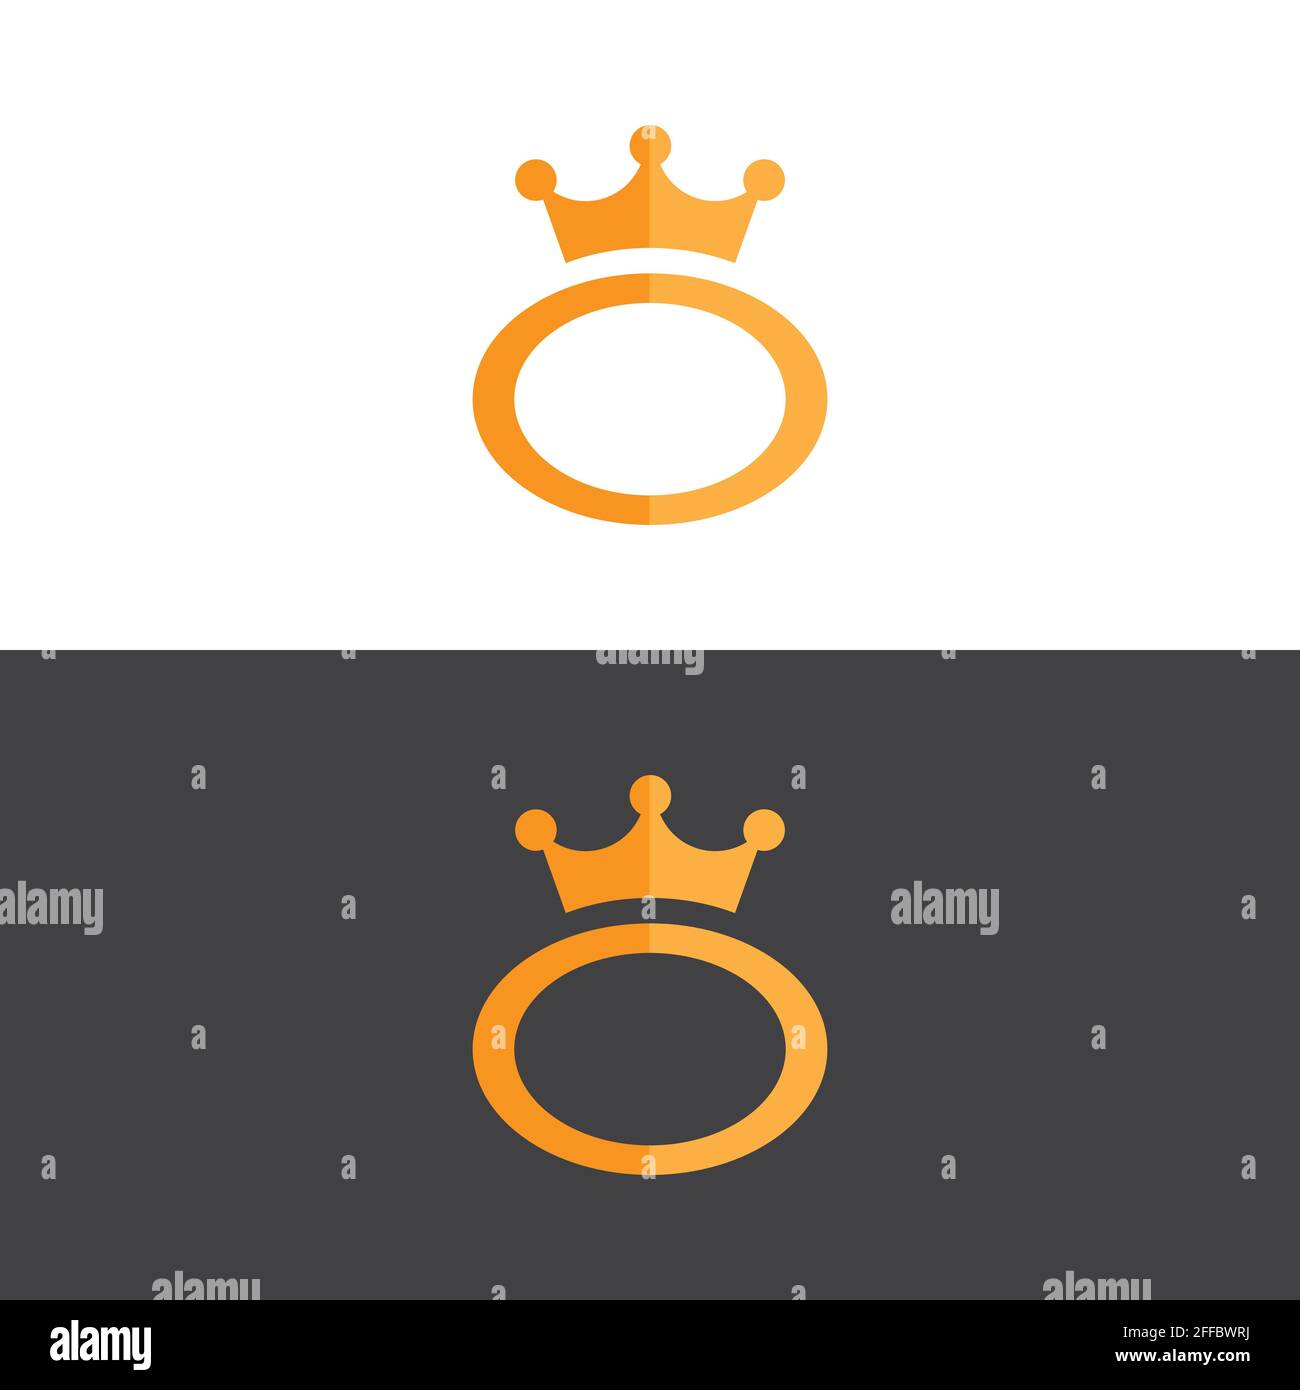 elegant crown logo in gold frame vector image Stock Vector